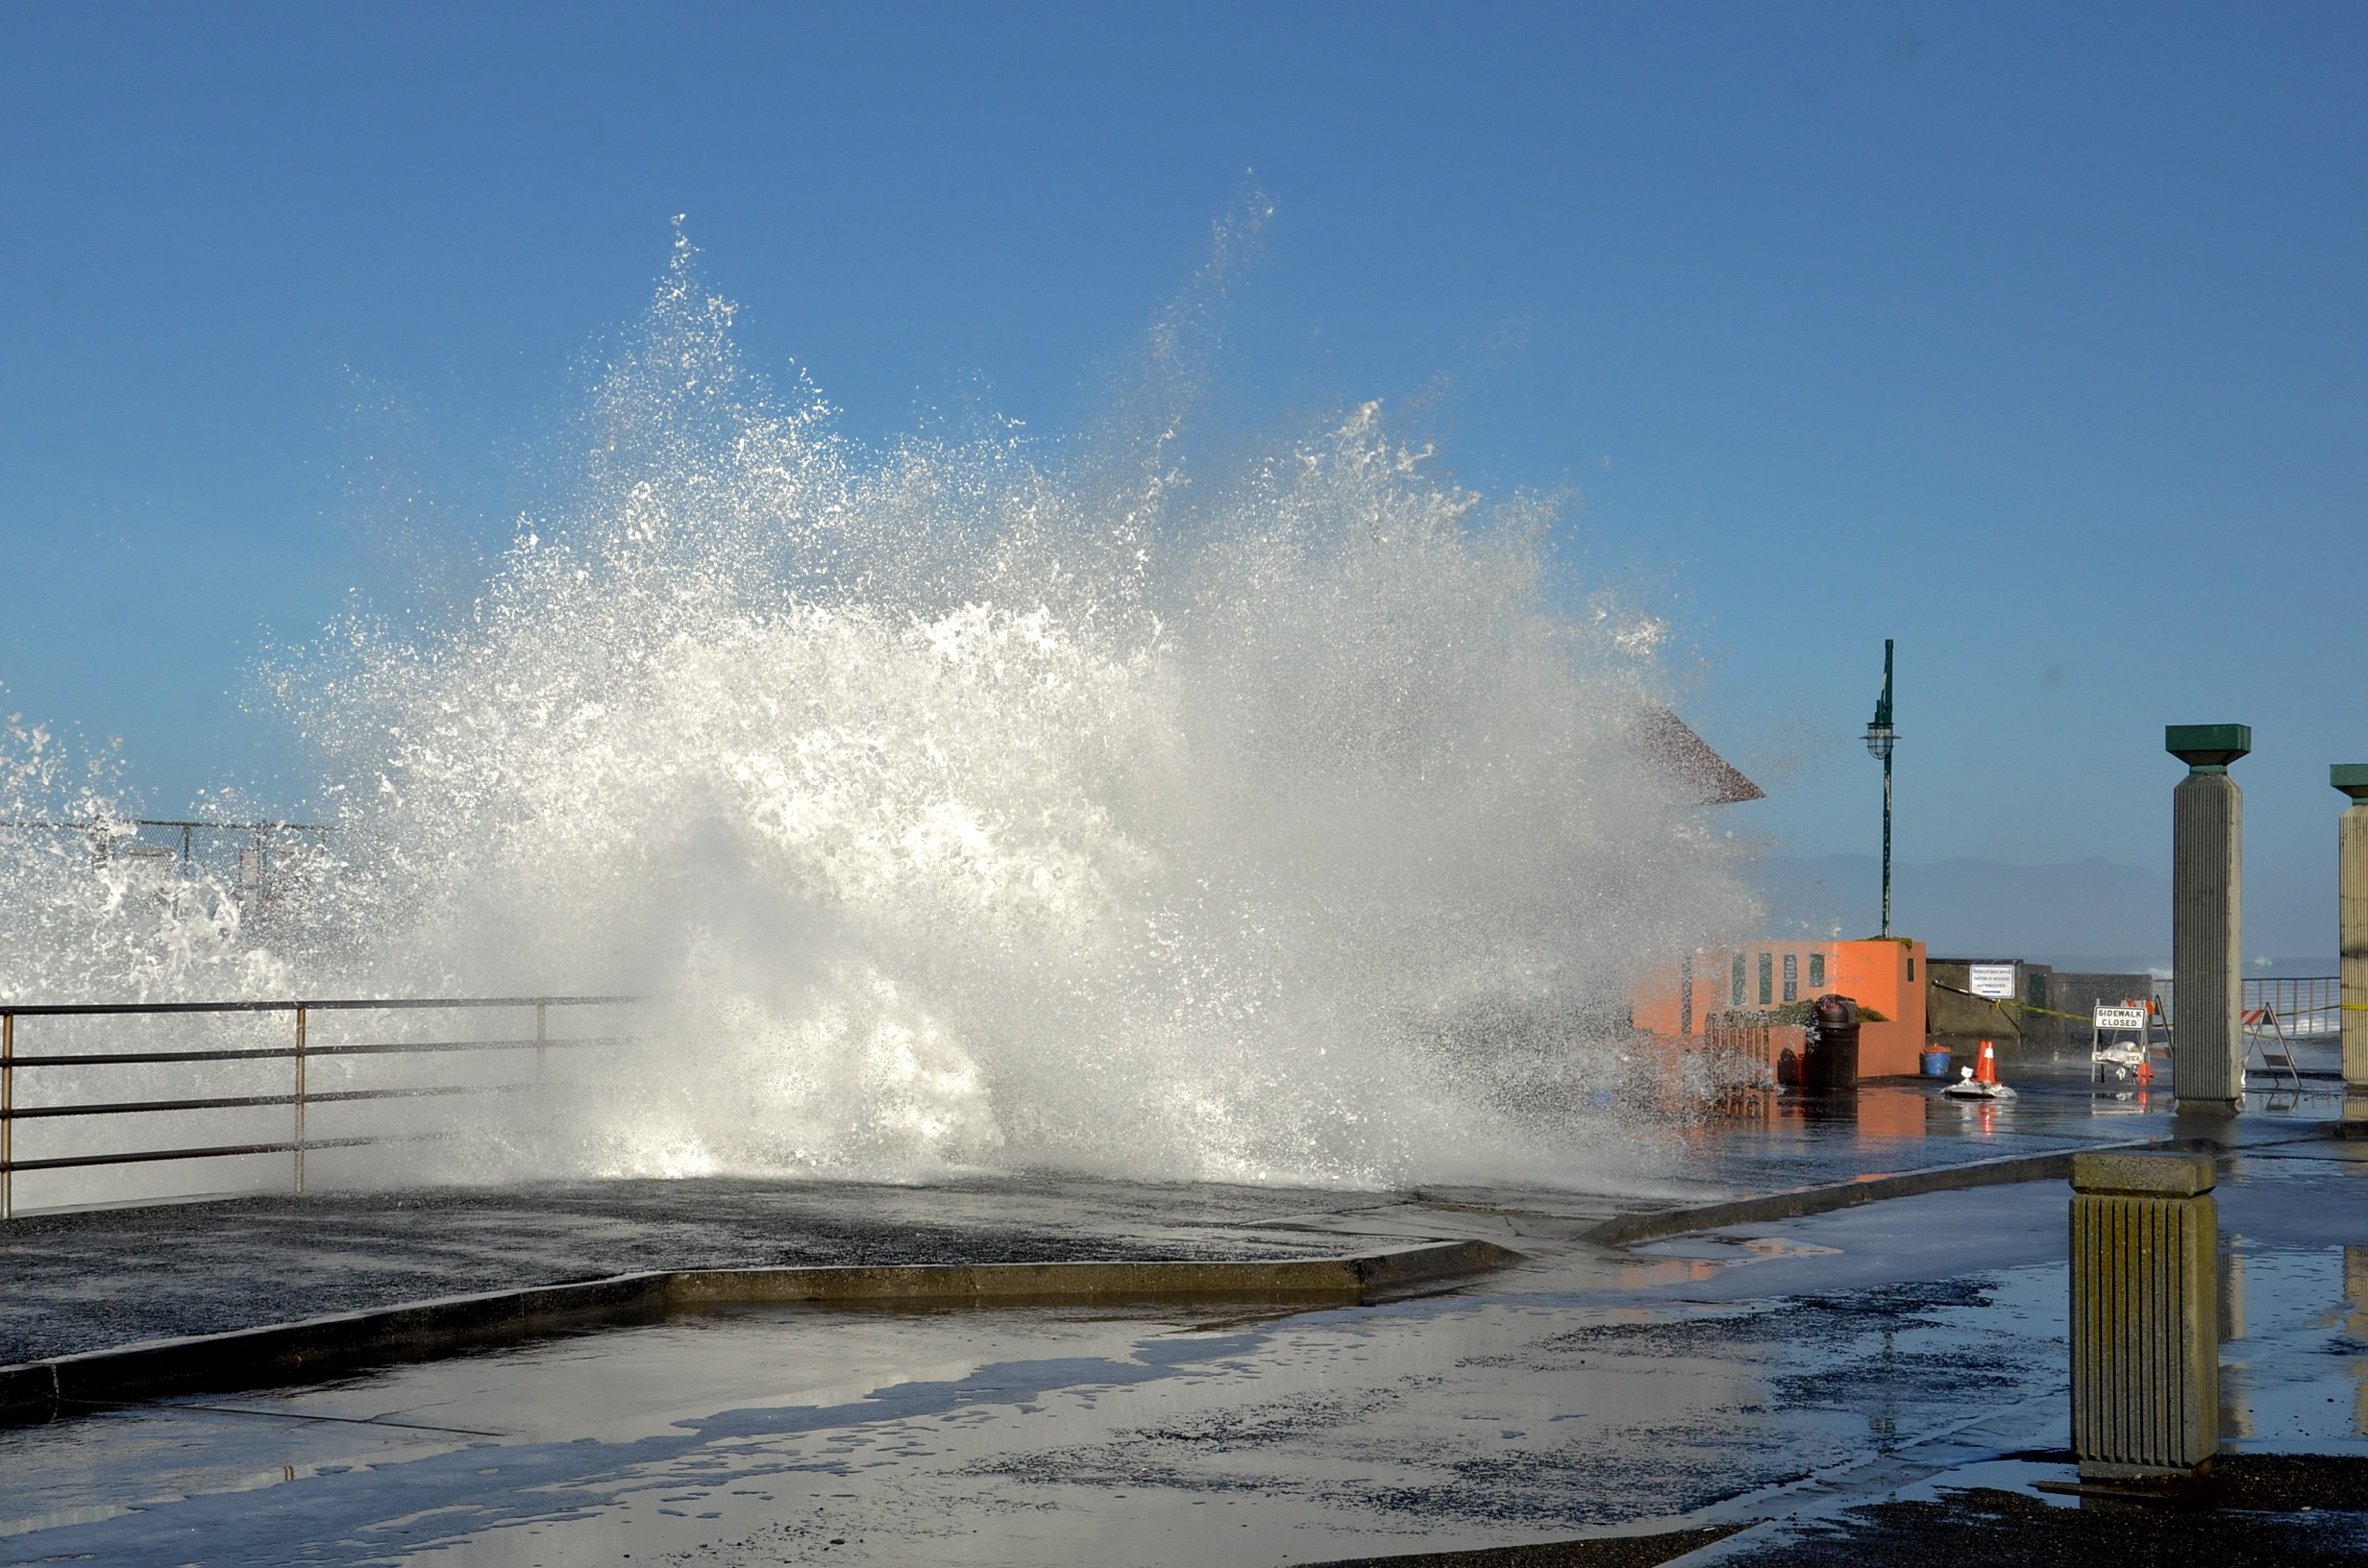 Image of large wave exploding onto pier.